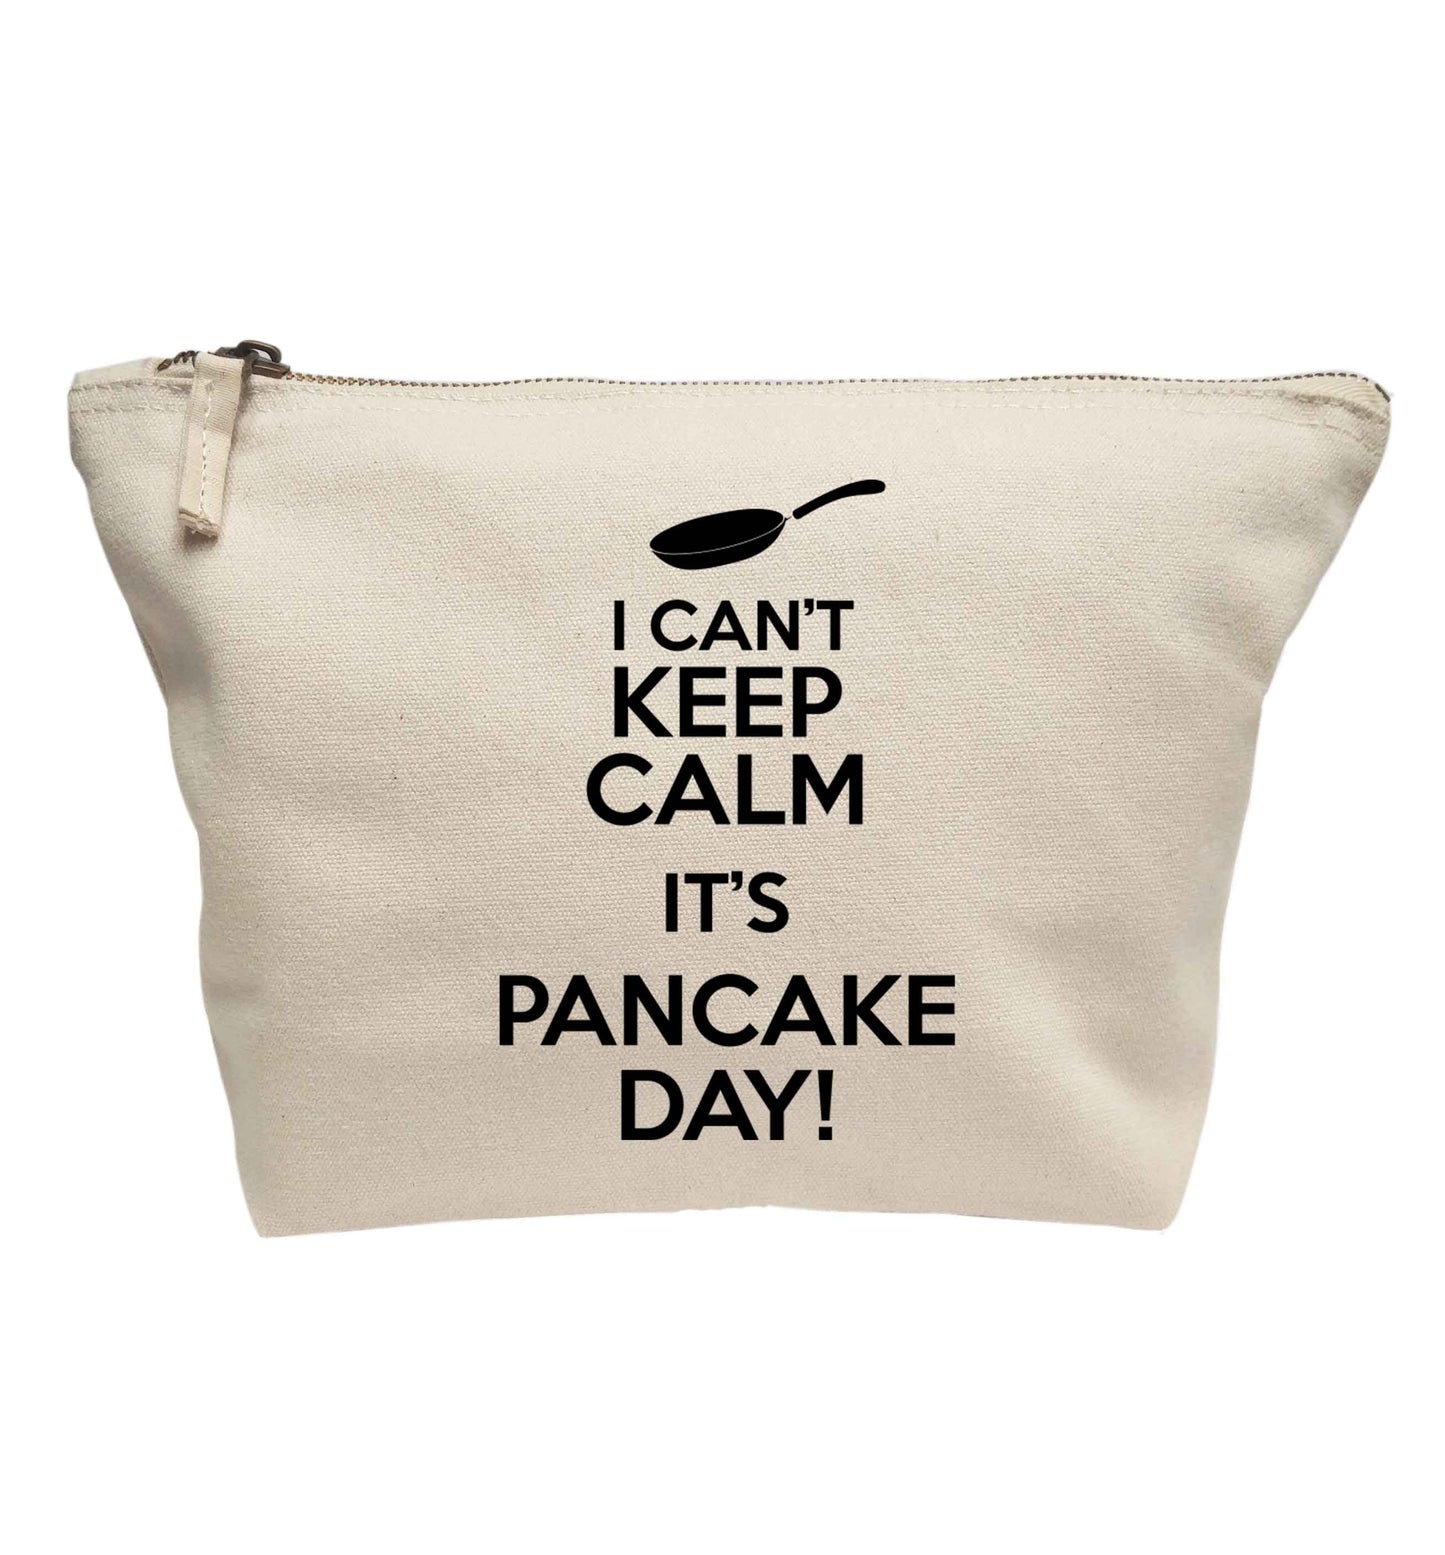 I can't keep calm it's pancake day! | Makeup / wash bag